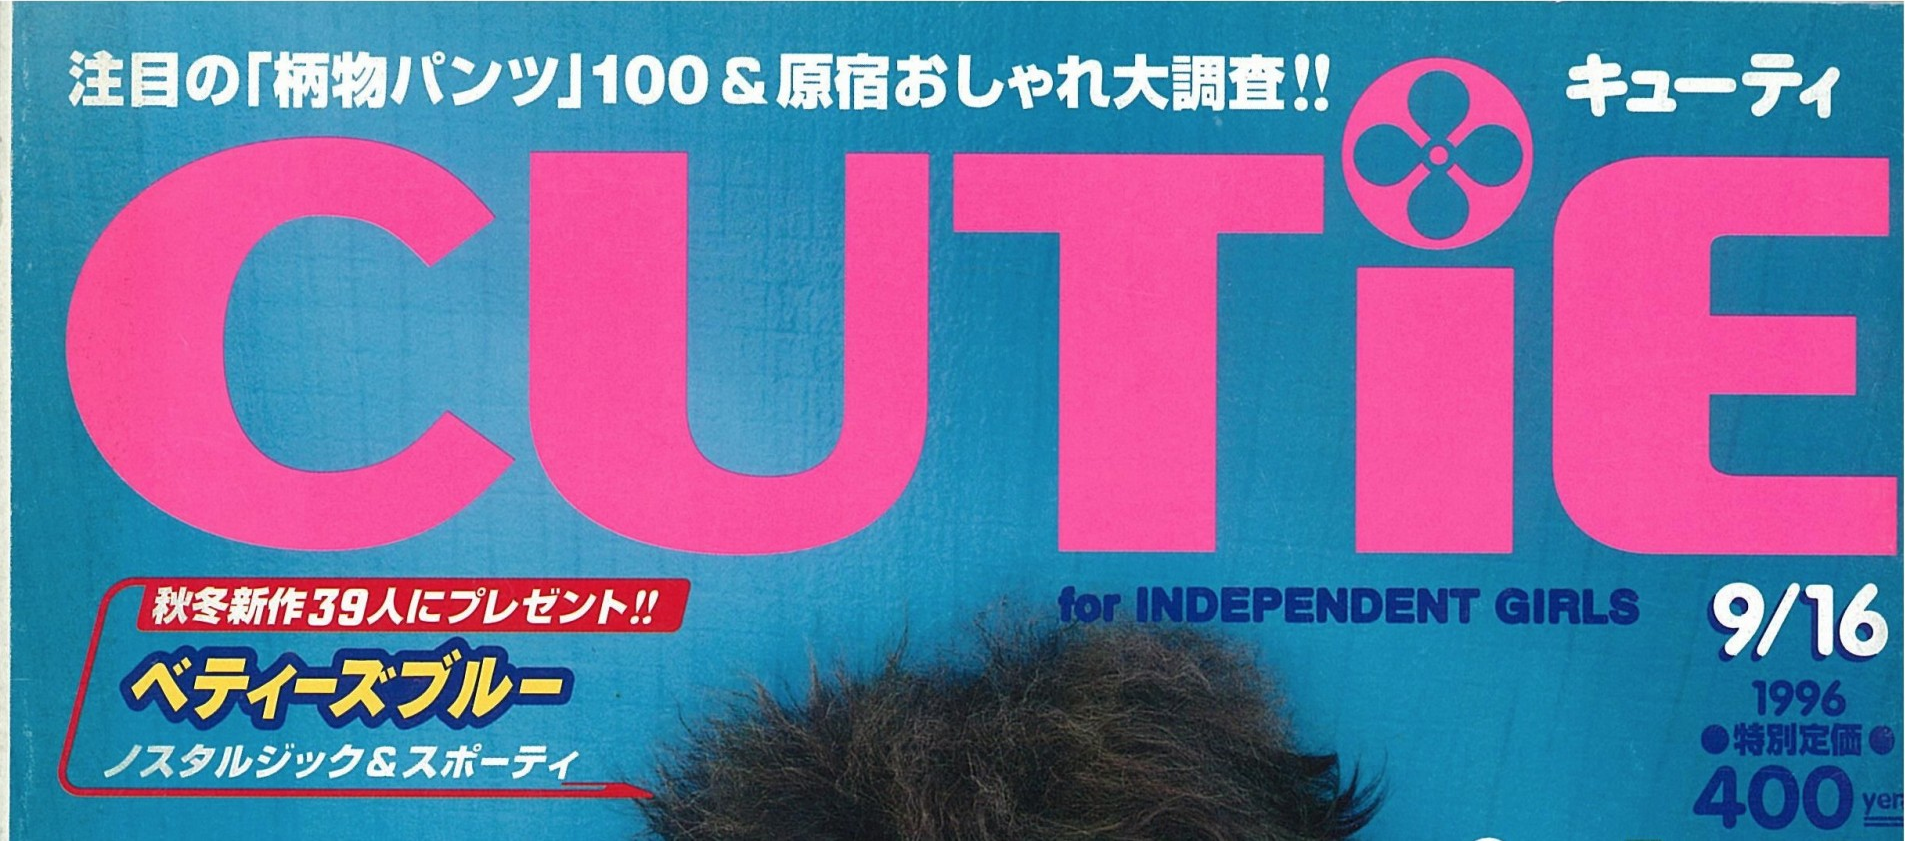 CUTIE JAPANESE MAGAZINE FONT ID?